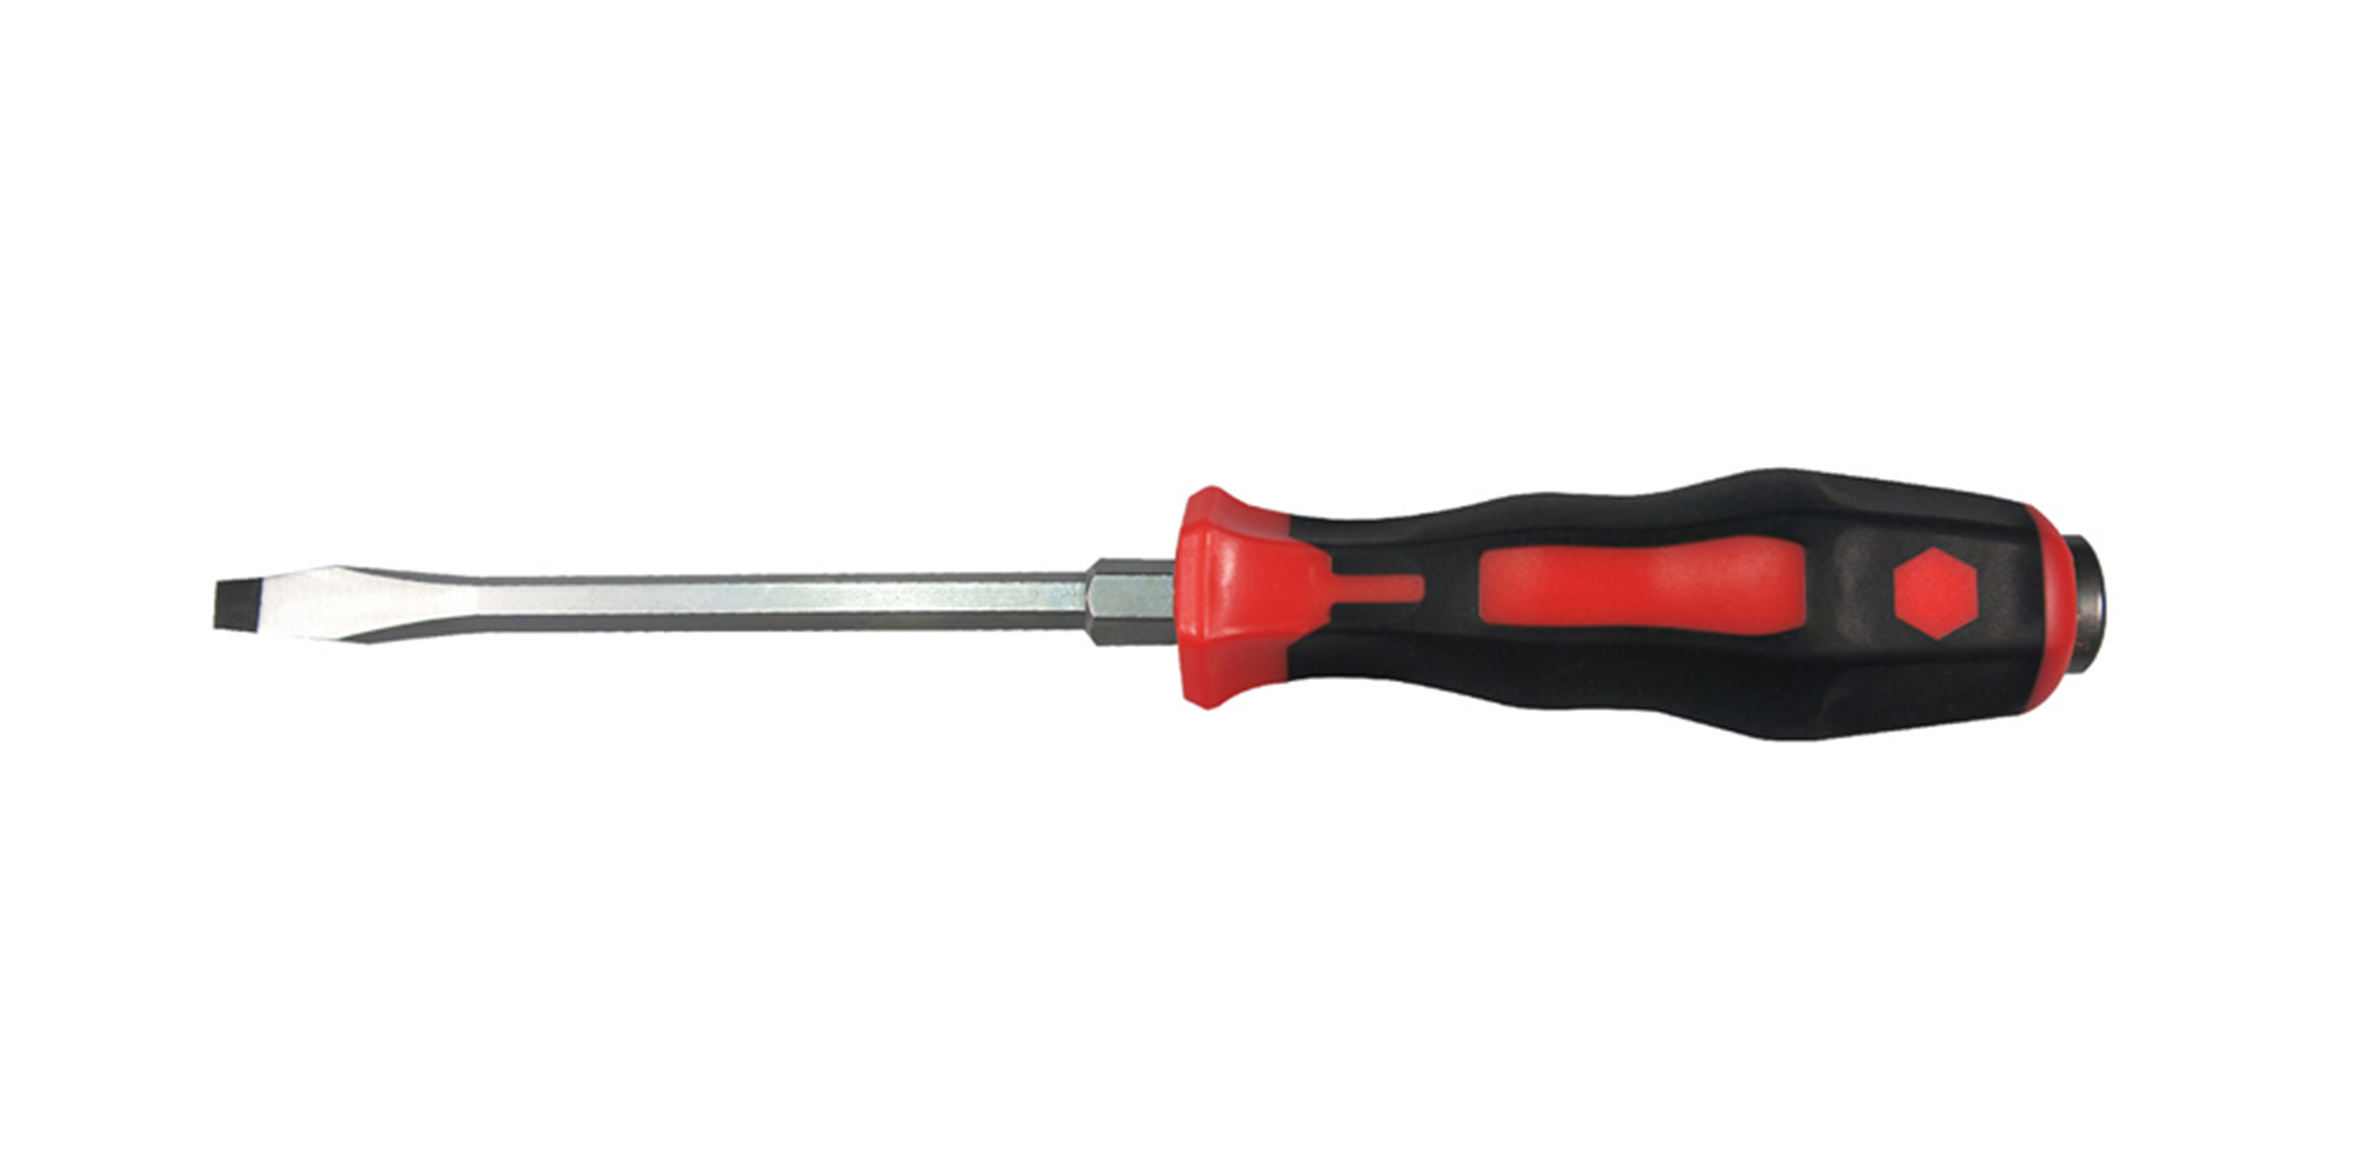 Go-through (hammerhead) & HEX BOLSTER screwdrivers, 725 series